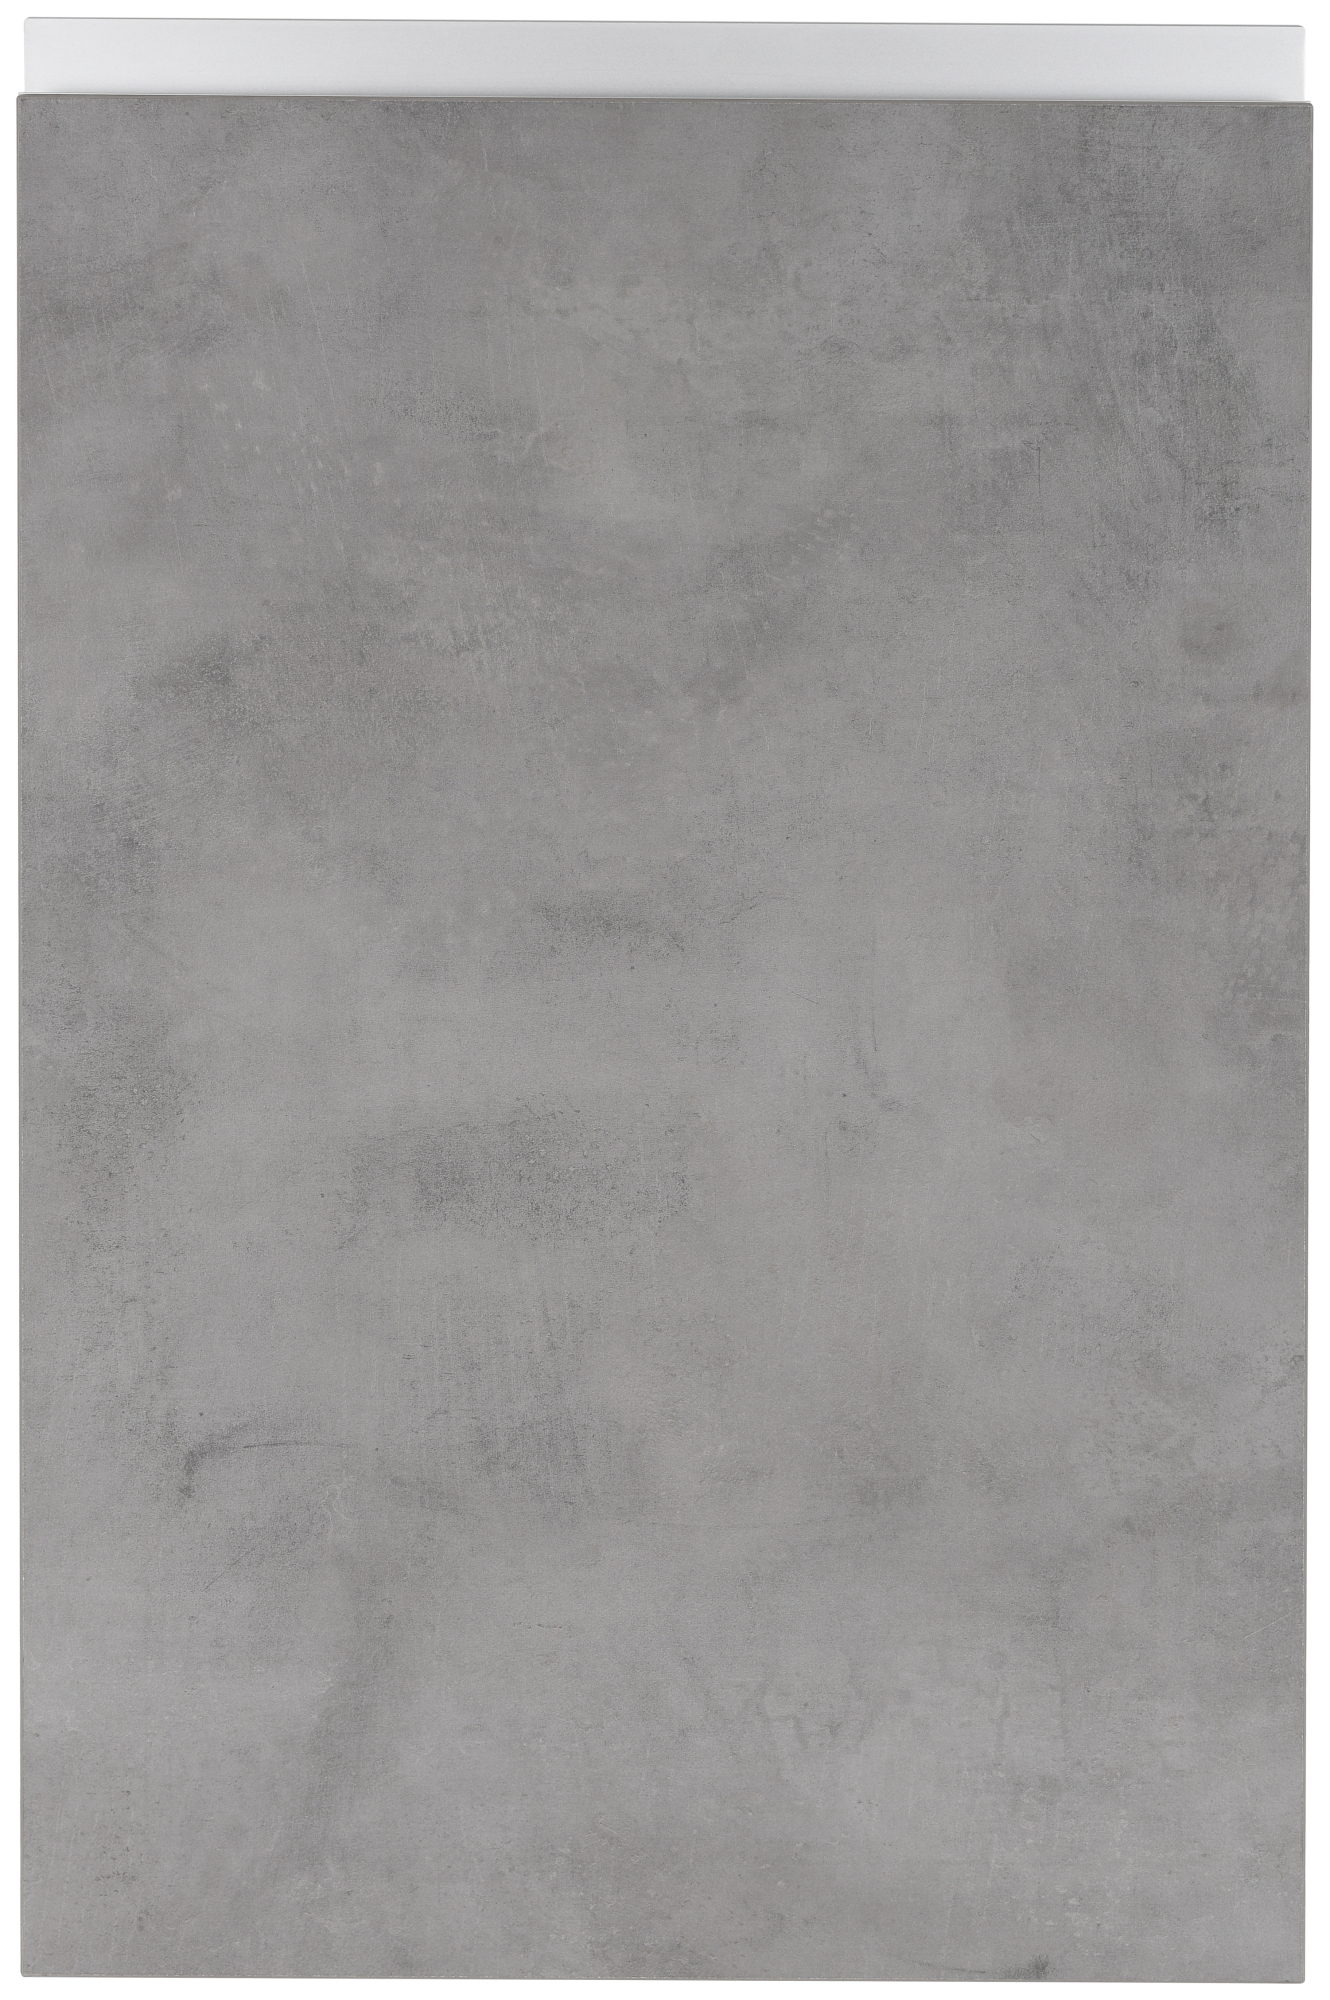 Puerta mueble de cocina mikonos cemento oscuro 39,7x63,7 cm